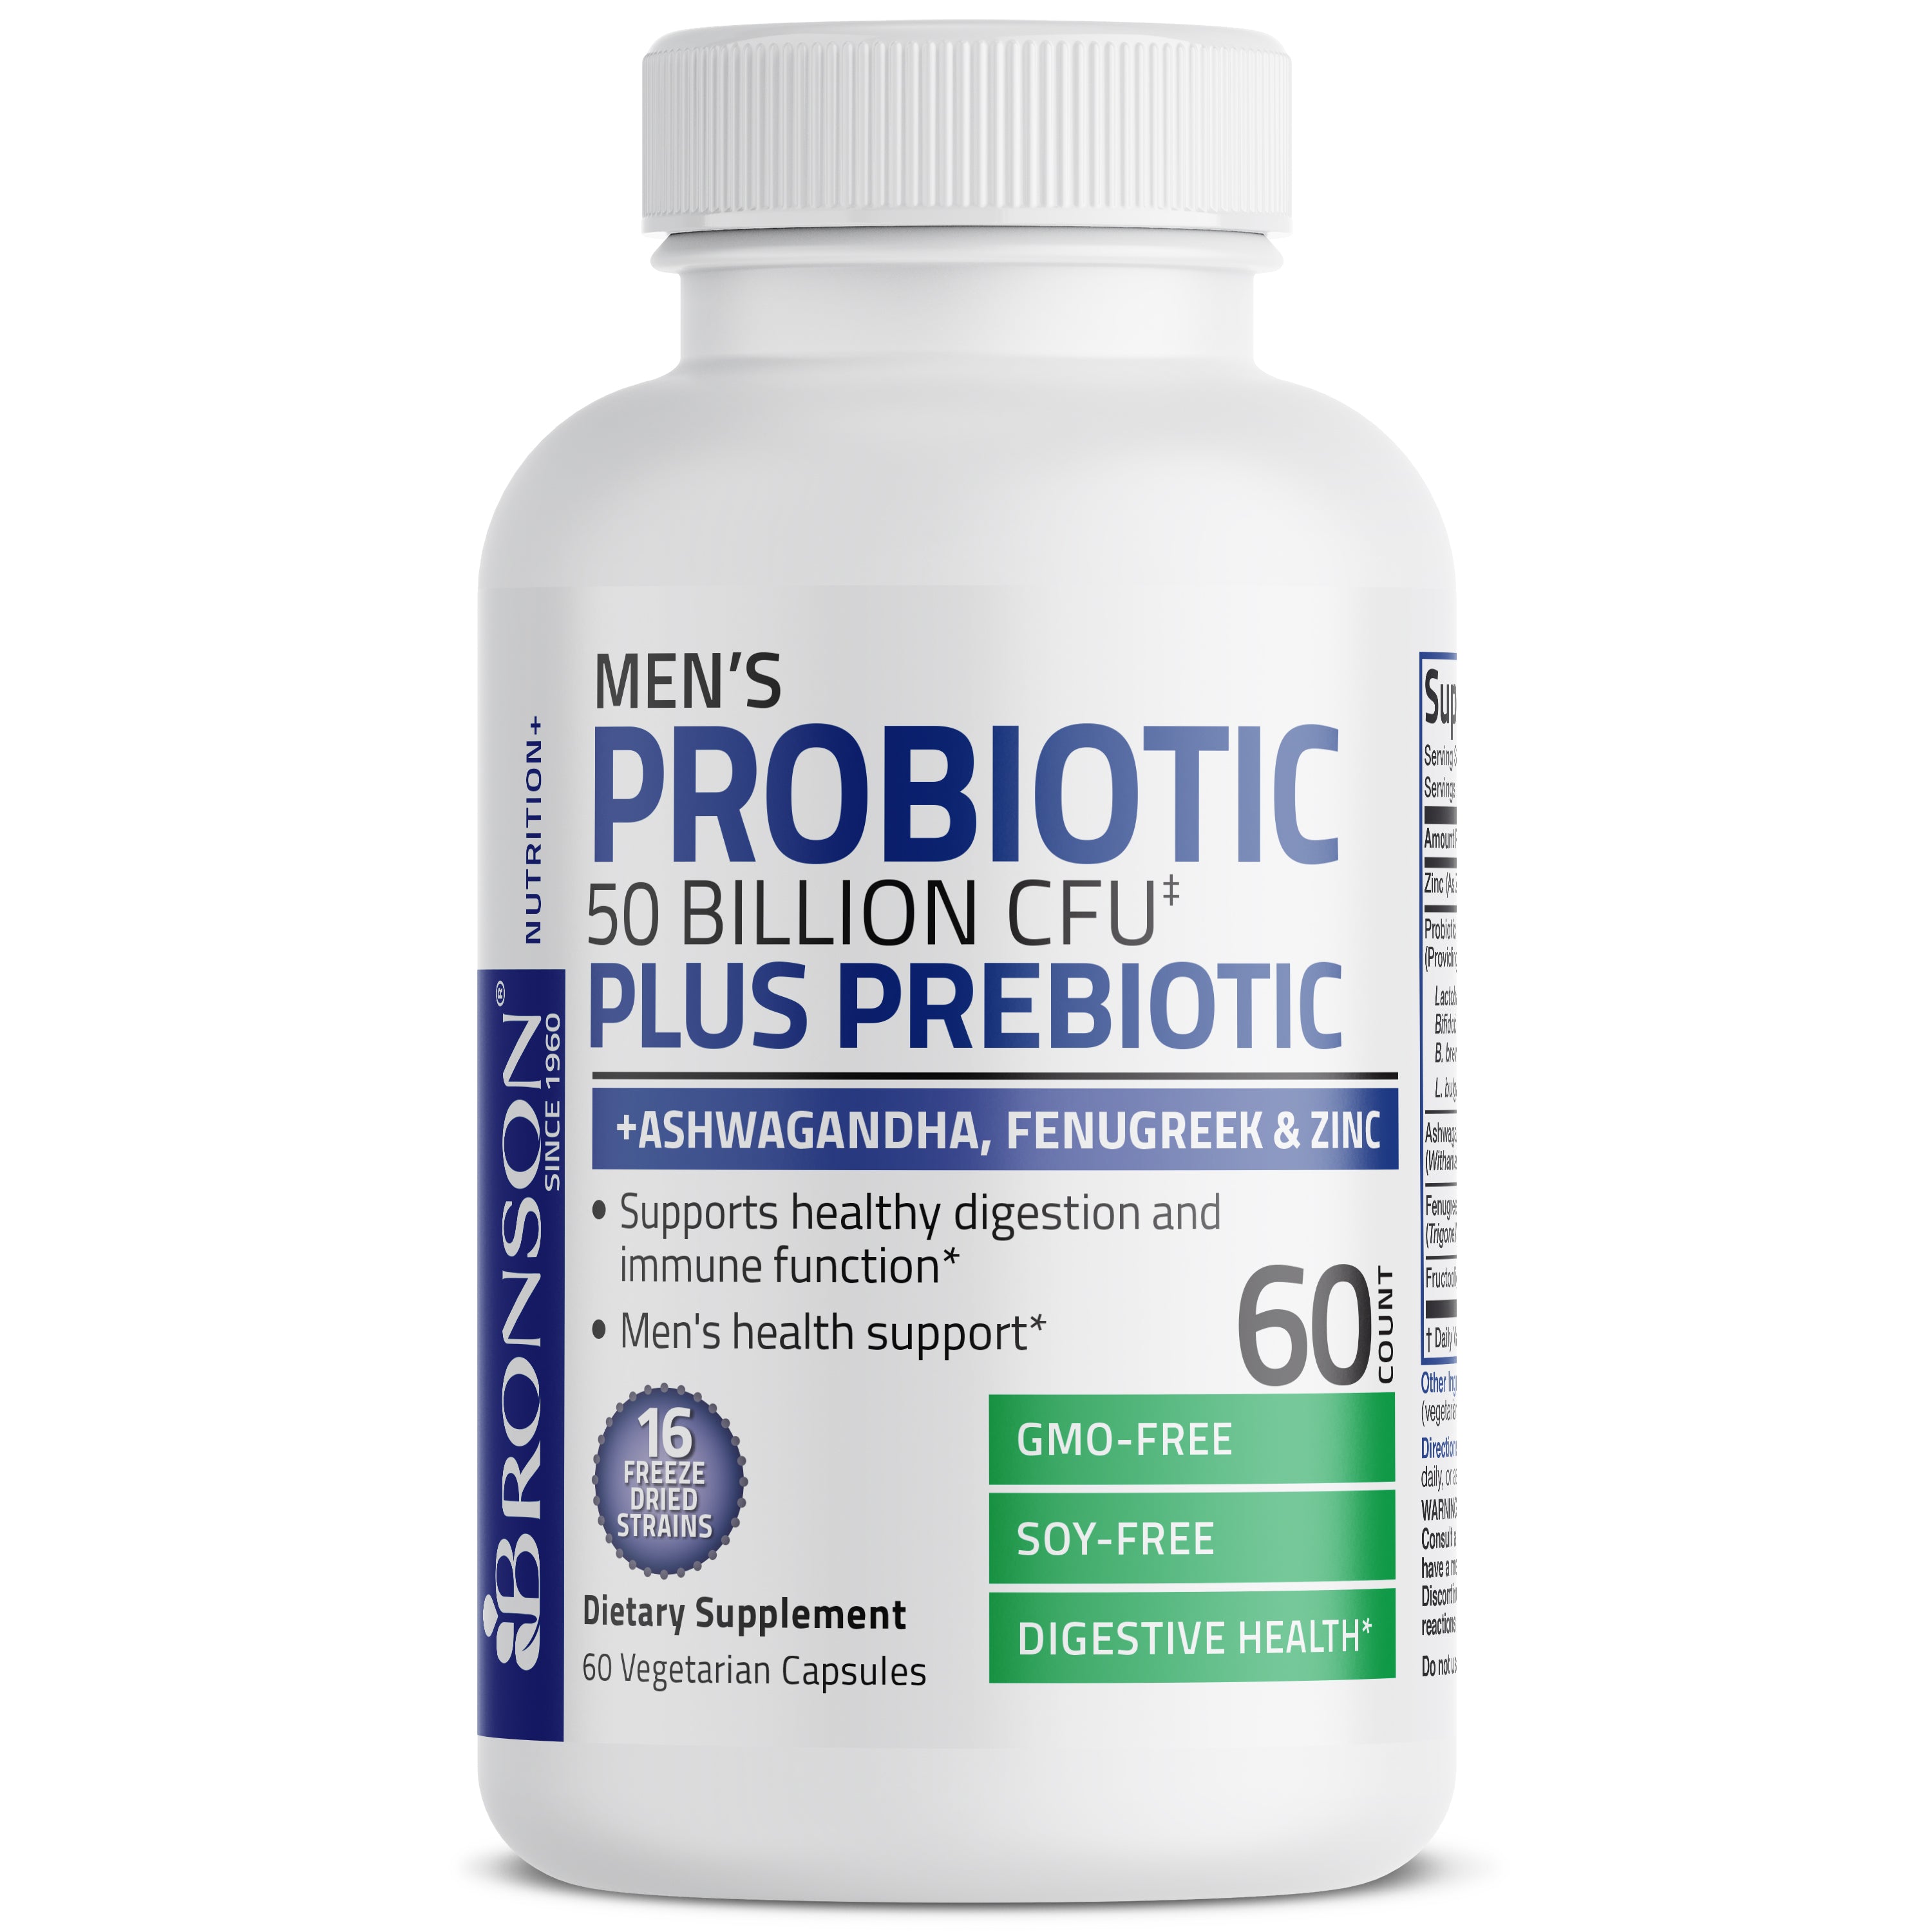 Men's Probiotic 50 Billion CFU Plus Prebiotic with Ashwagandha, Fenugreek & Zinc, 60 Vegetarian Capsules view 3 of 5